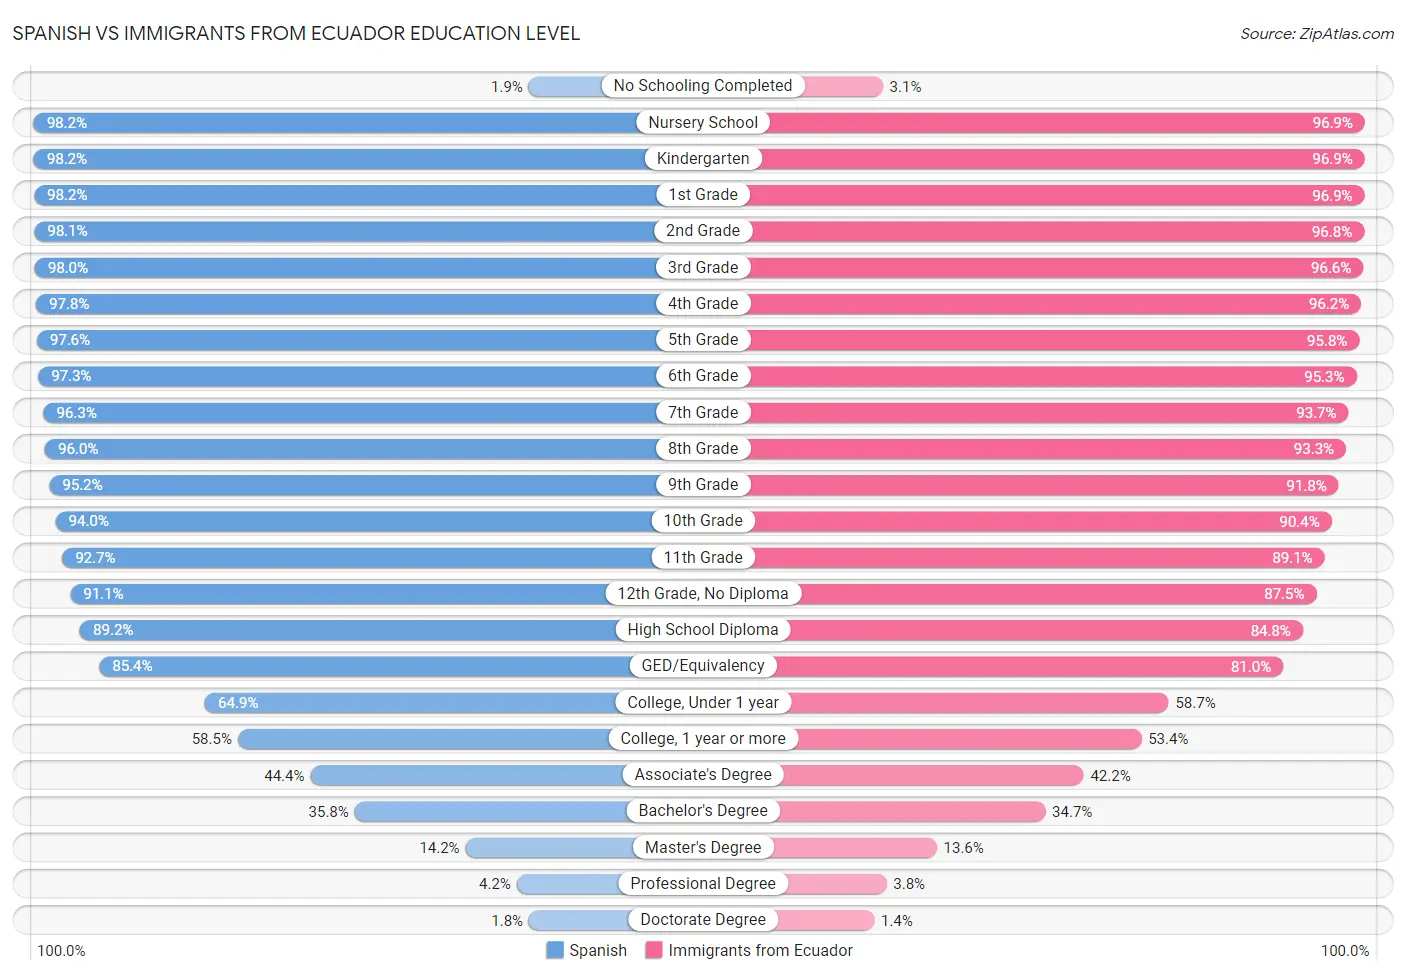 Spanish vs Immigrants from Ecuador Education Level